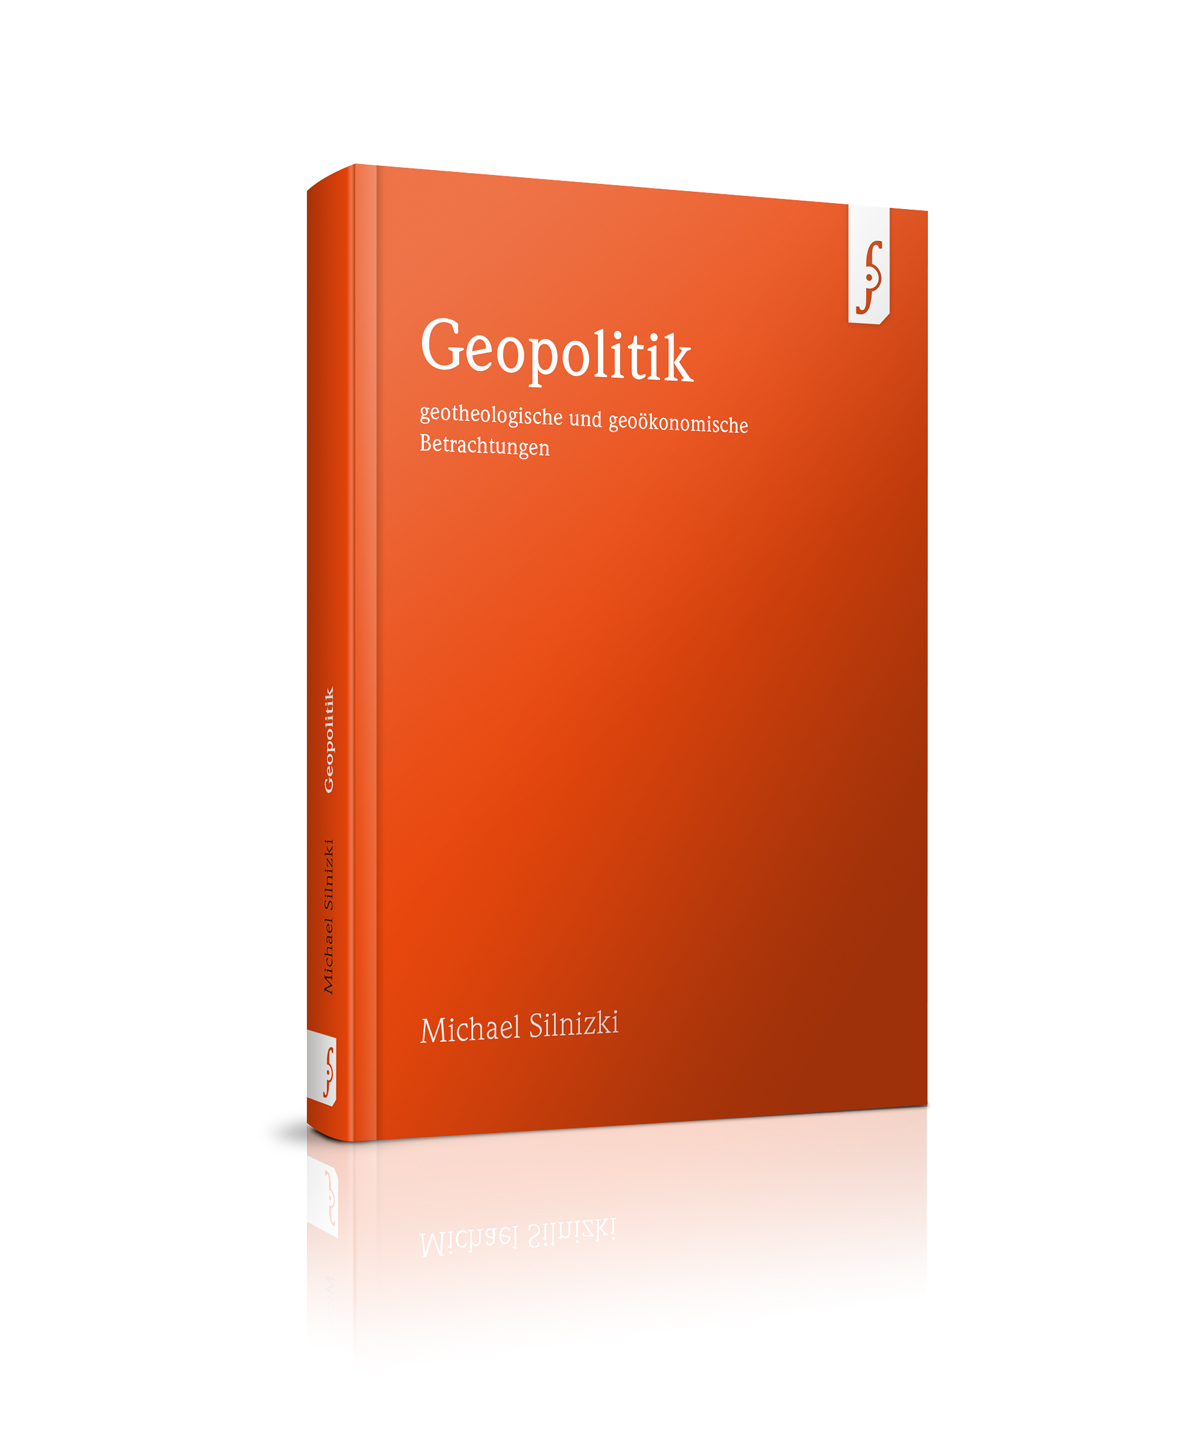 Geopolitik - ISBN 978-3-9816169-7-2, 68 S. 9,95 € (D)